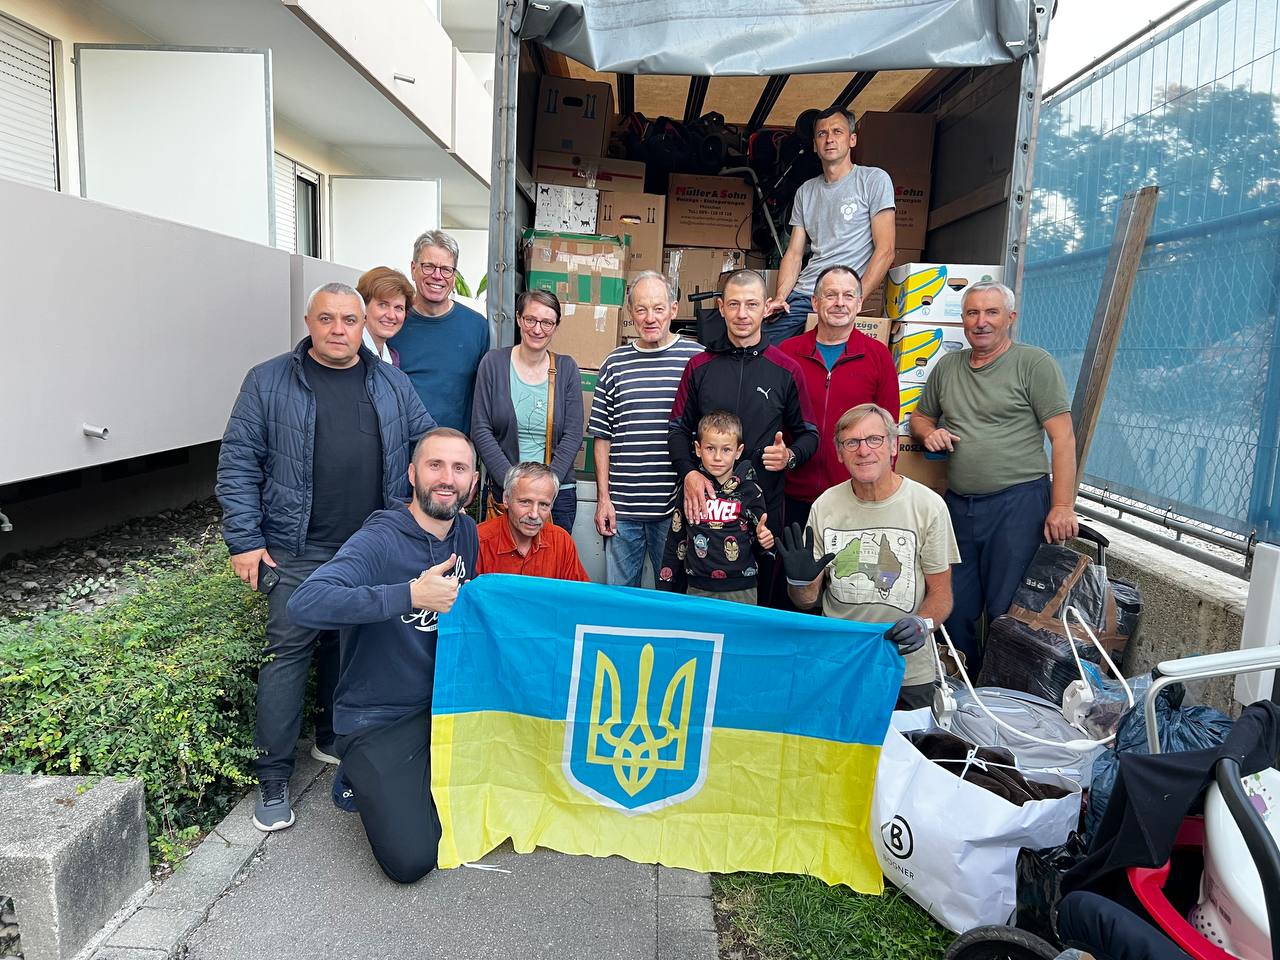 Група людей з жовто-блакитним прапором України